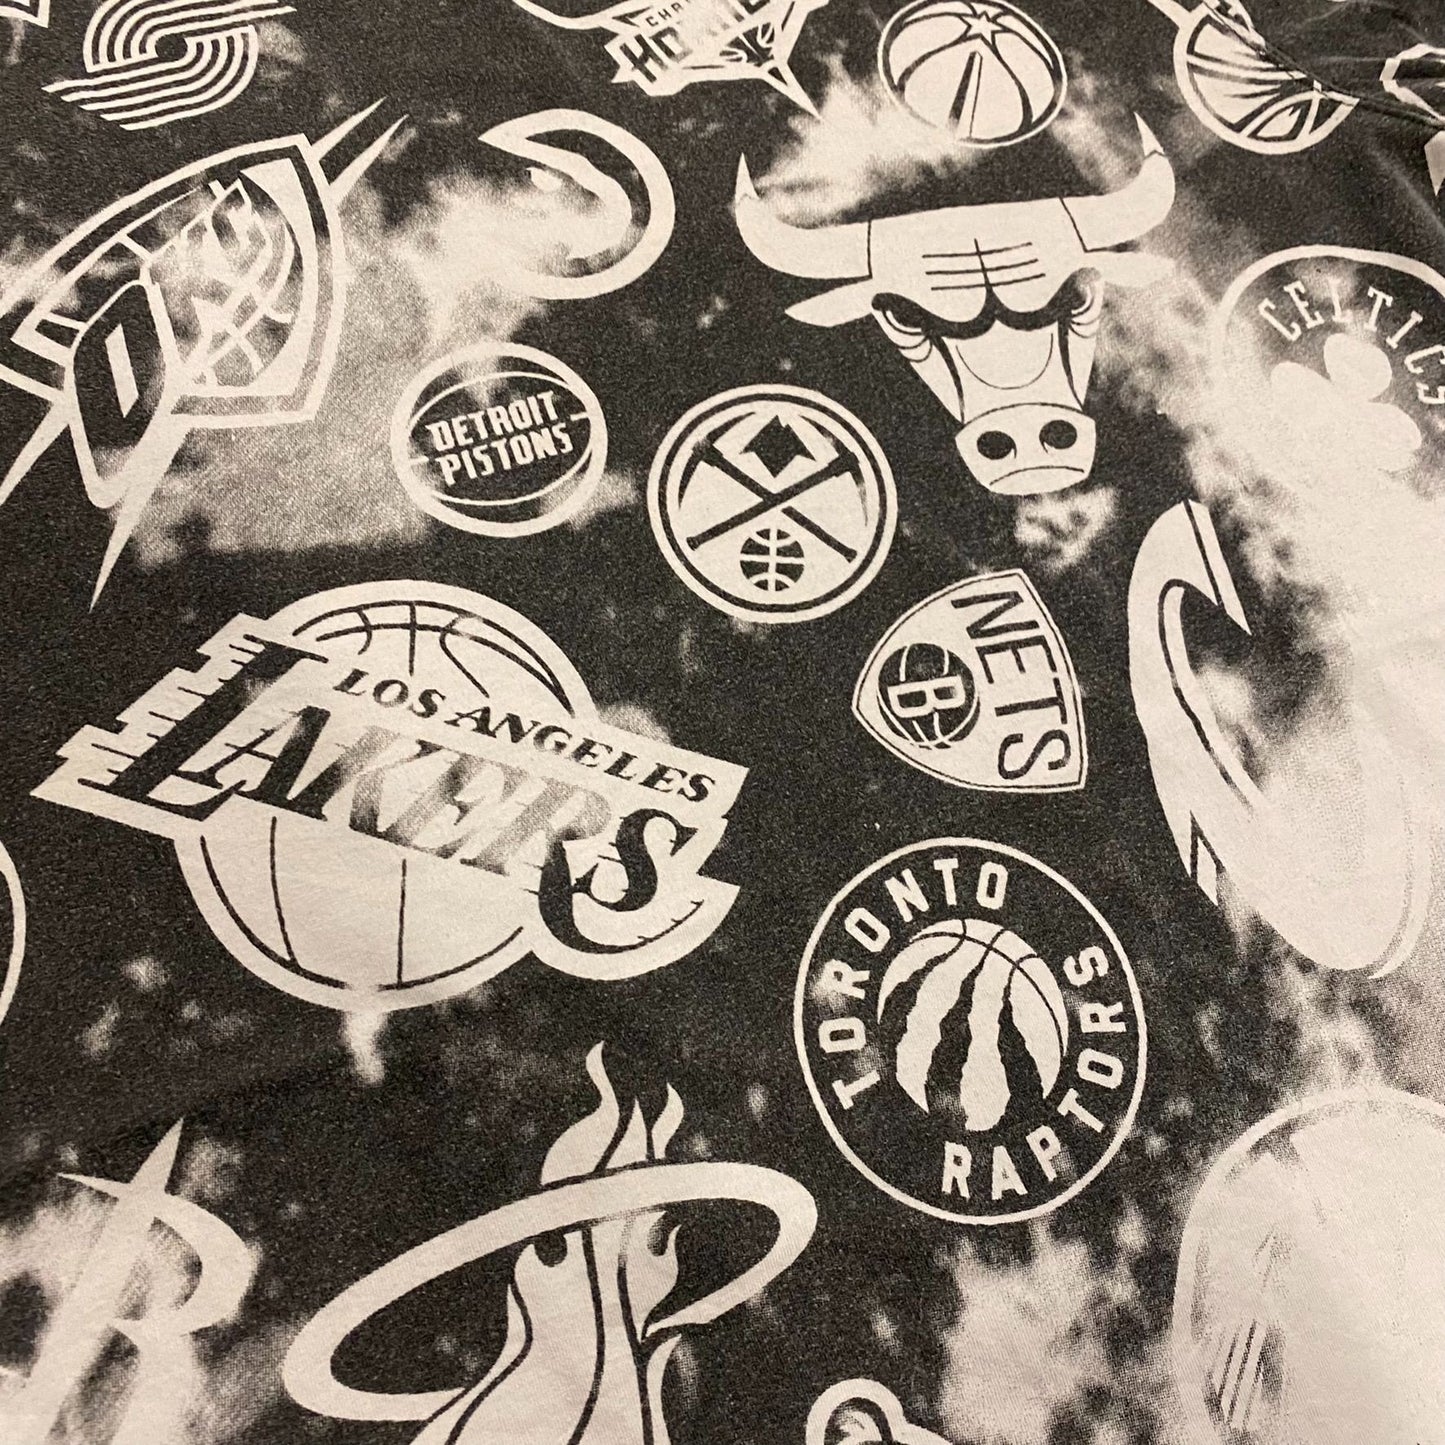 NBA All Over Print T-Shirt